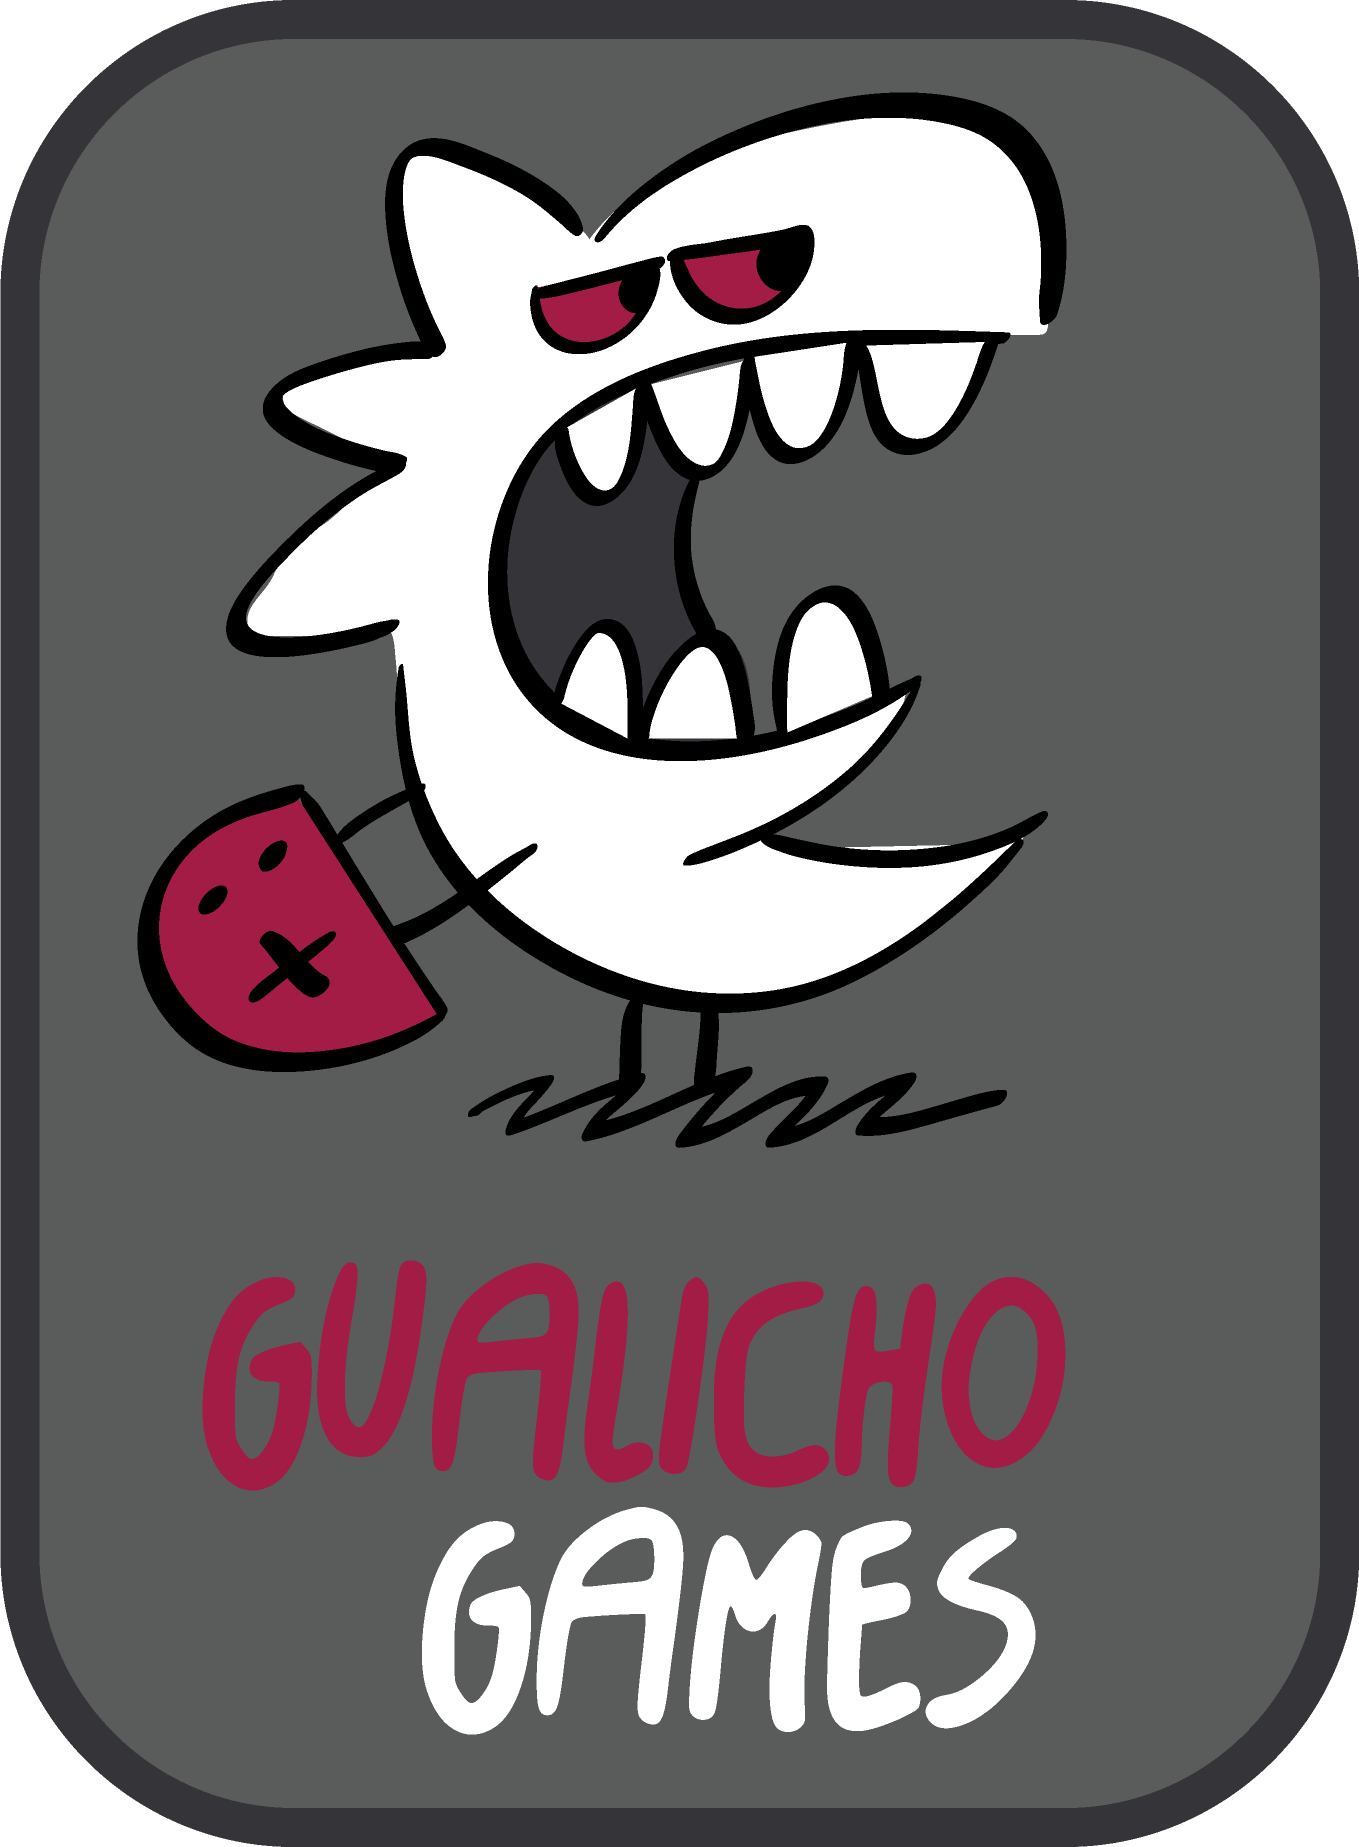 Gualicho Games - Logo.png